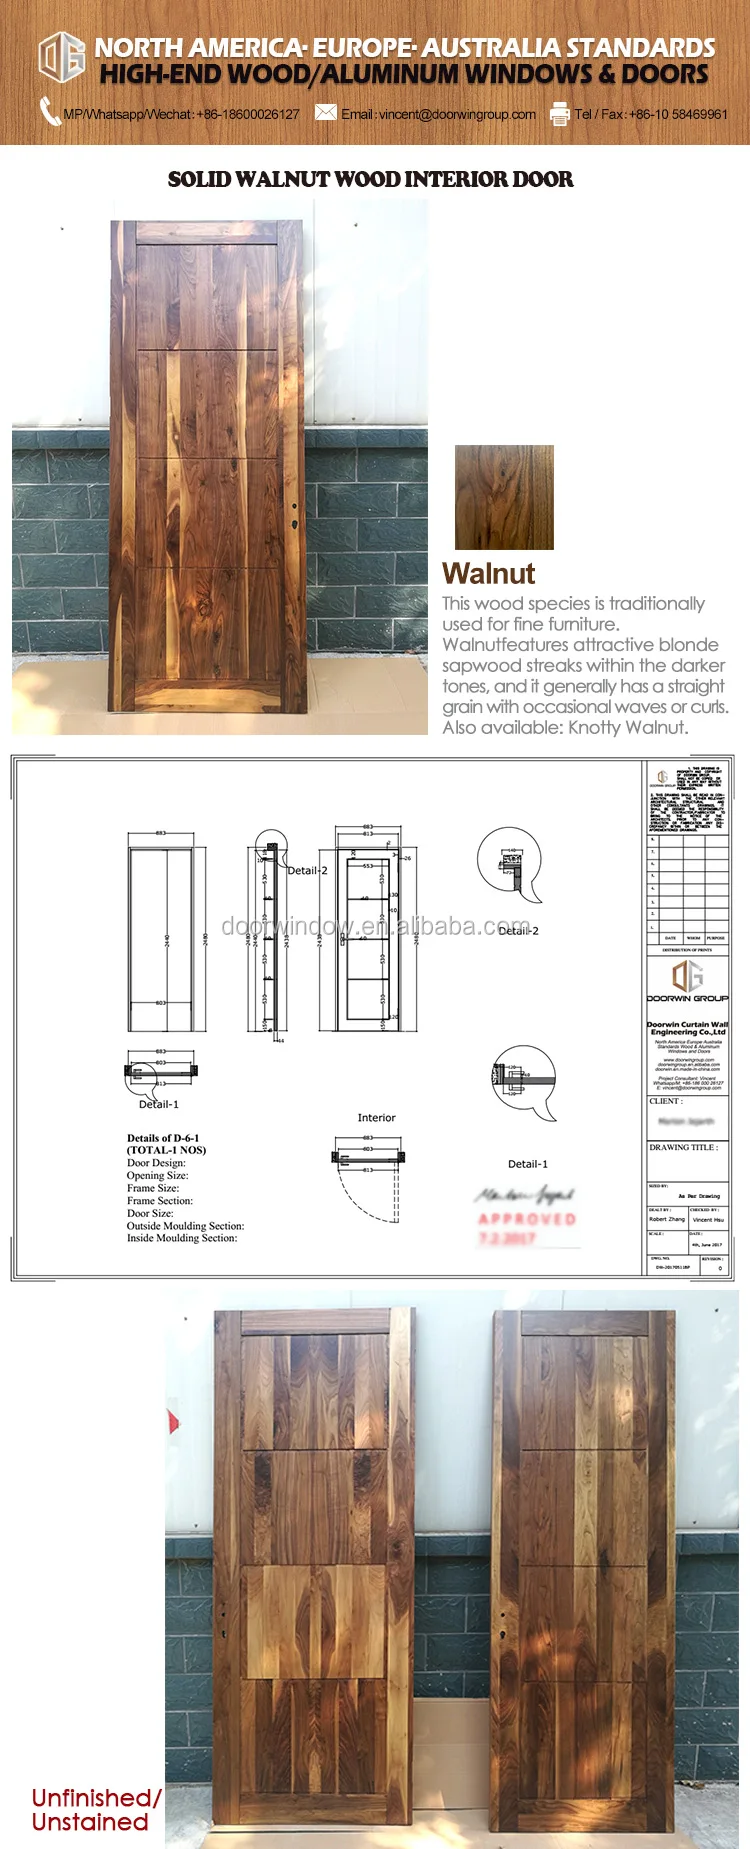 Modern new product design black walnut interior house door with 4 panels